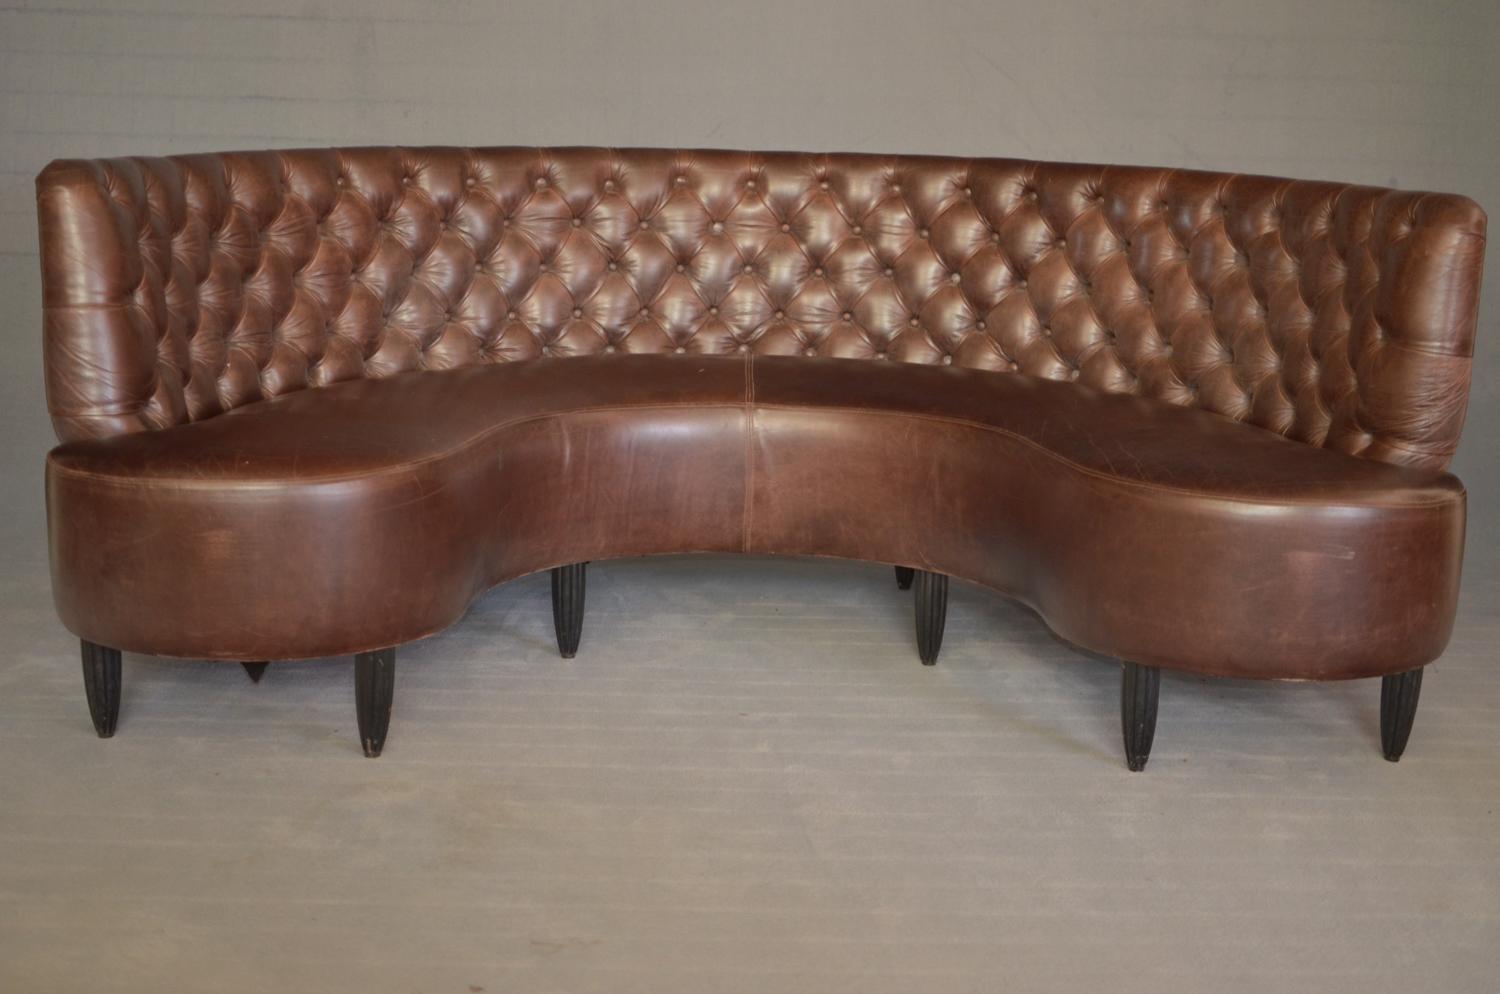 British Chesterfield Horseshoe Sofa in Brown Burnt Leather, United Kingdom, 1920